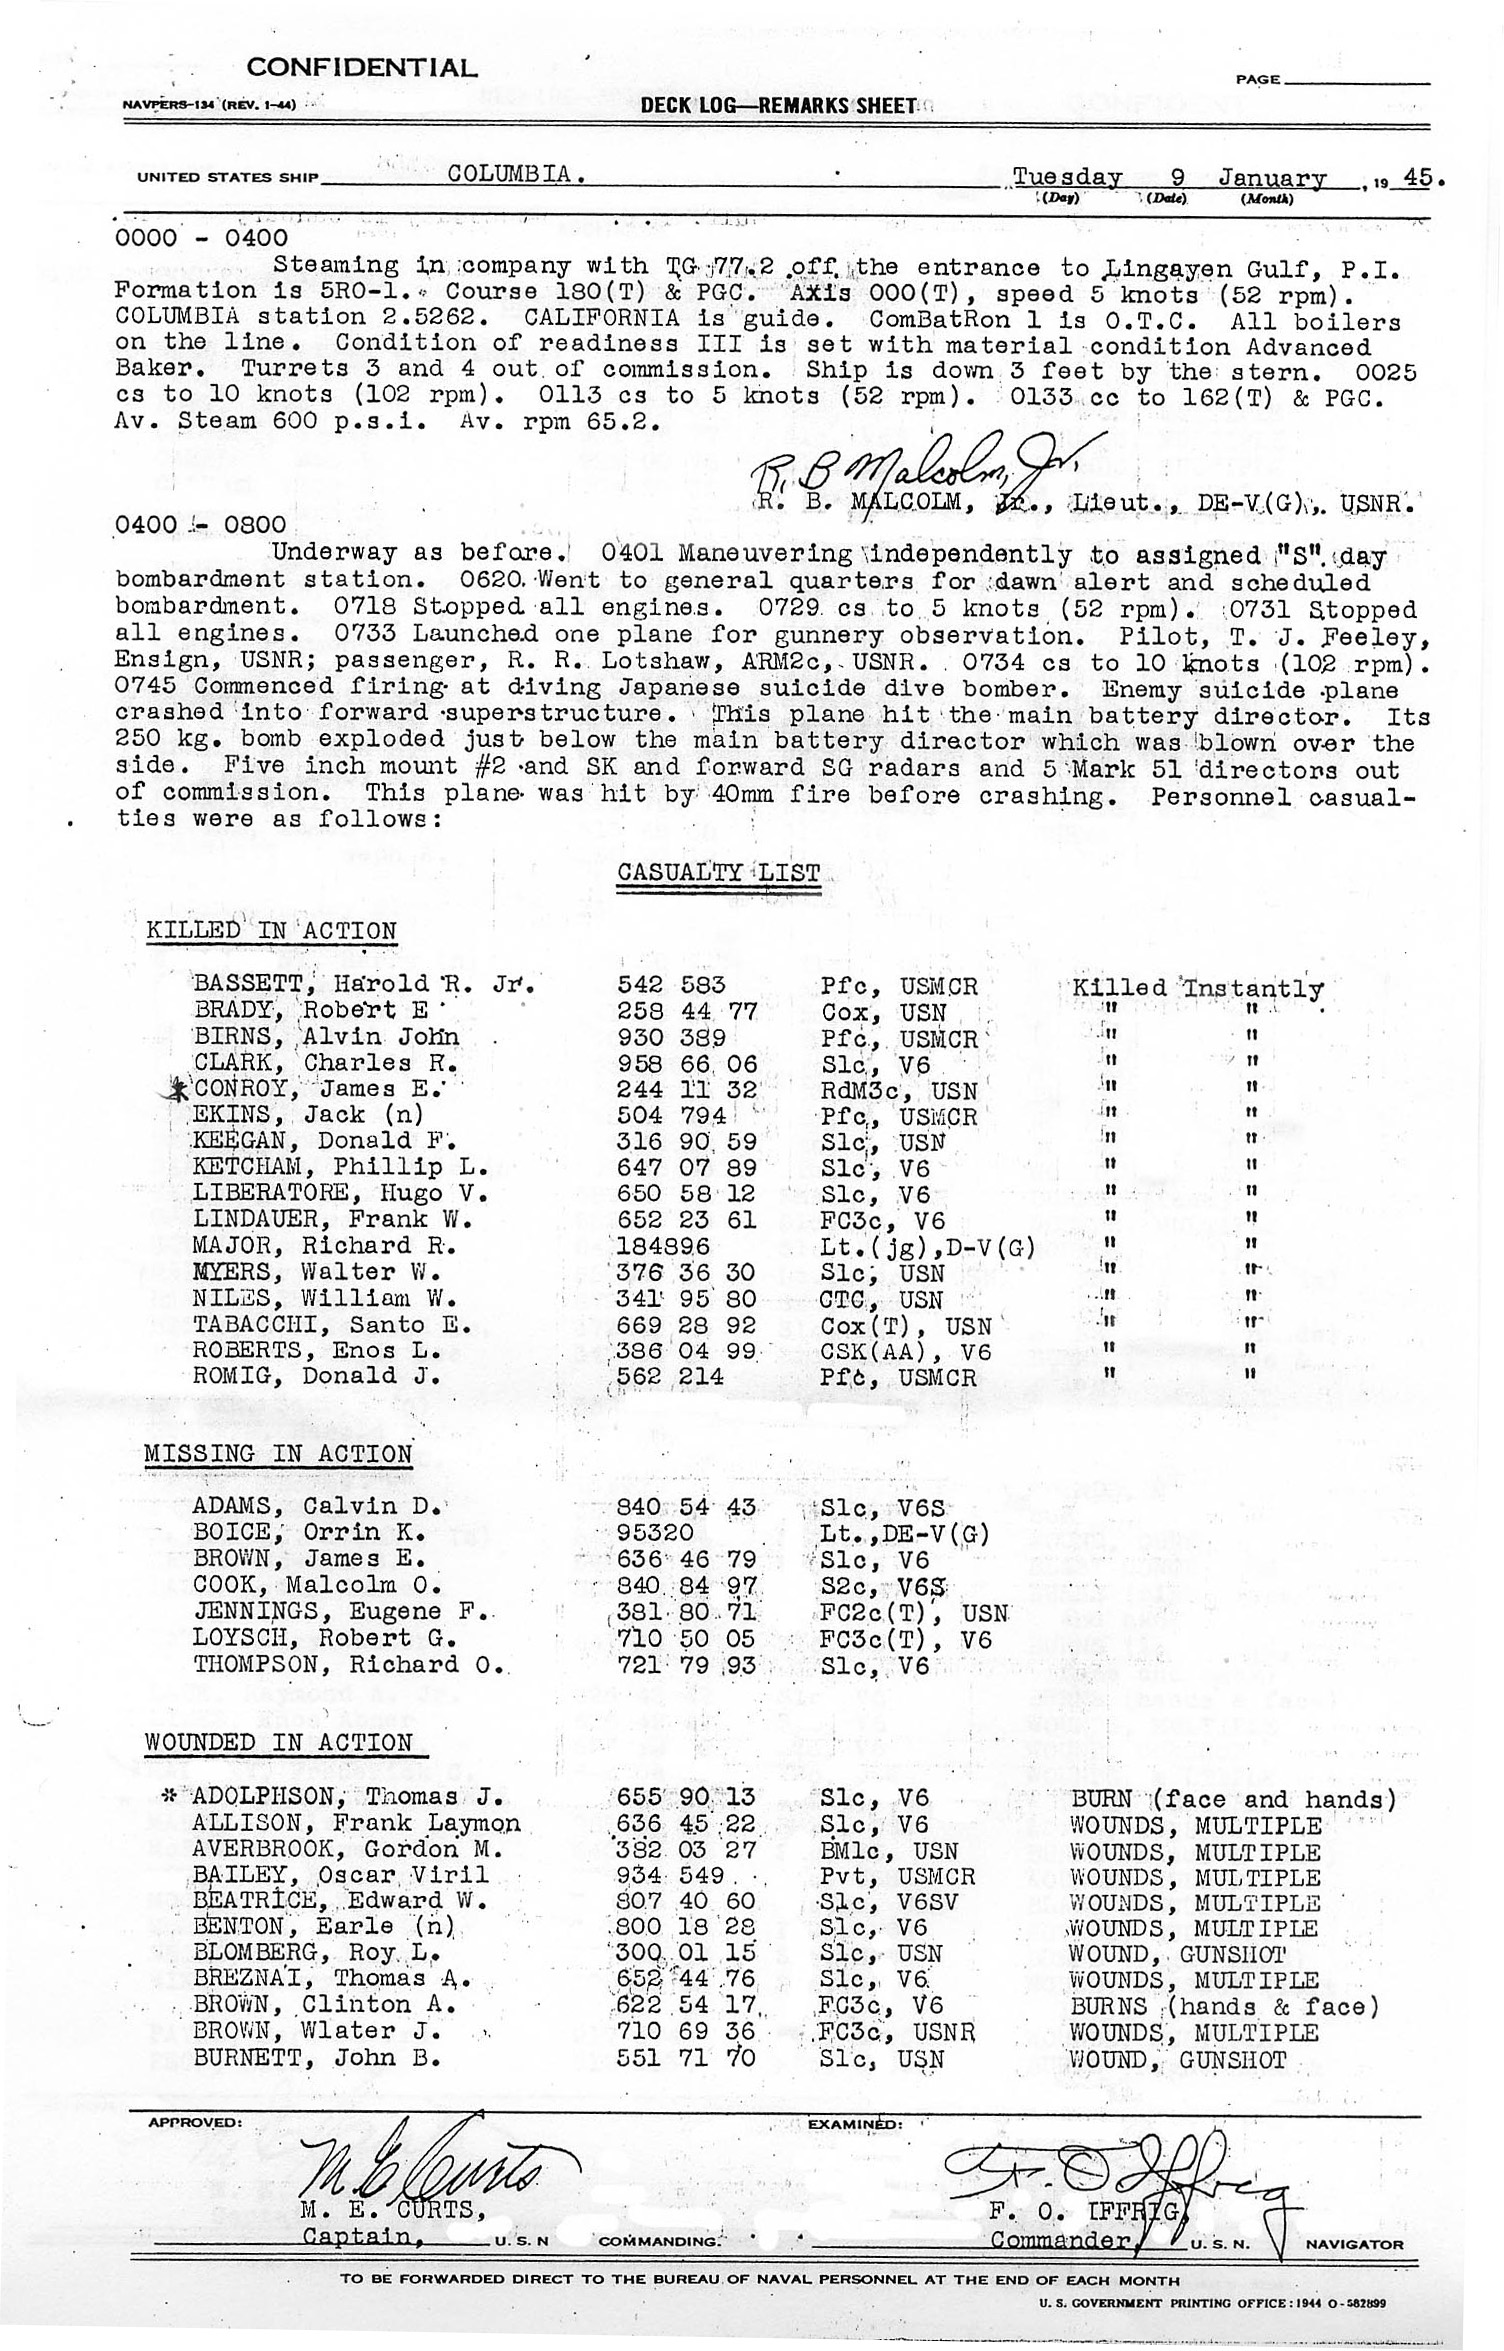 Deck Log January 9, 1945 sheet 1